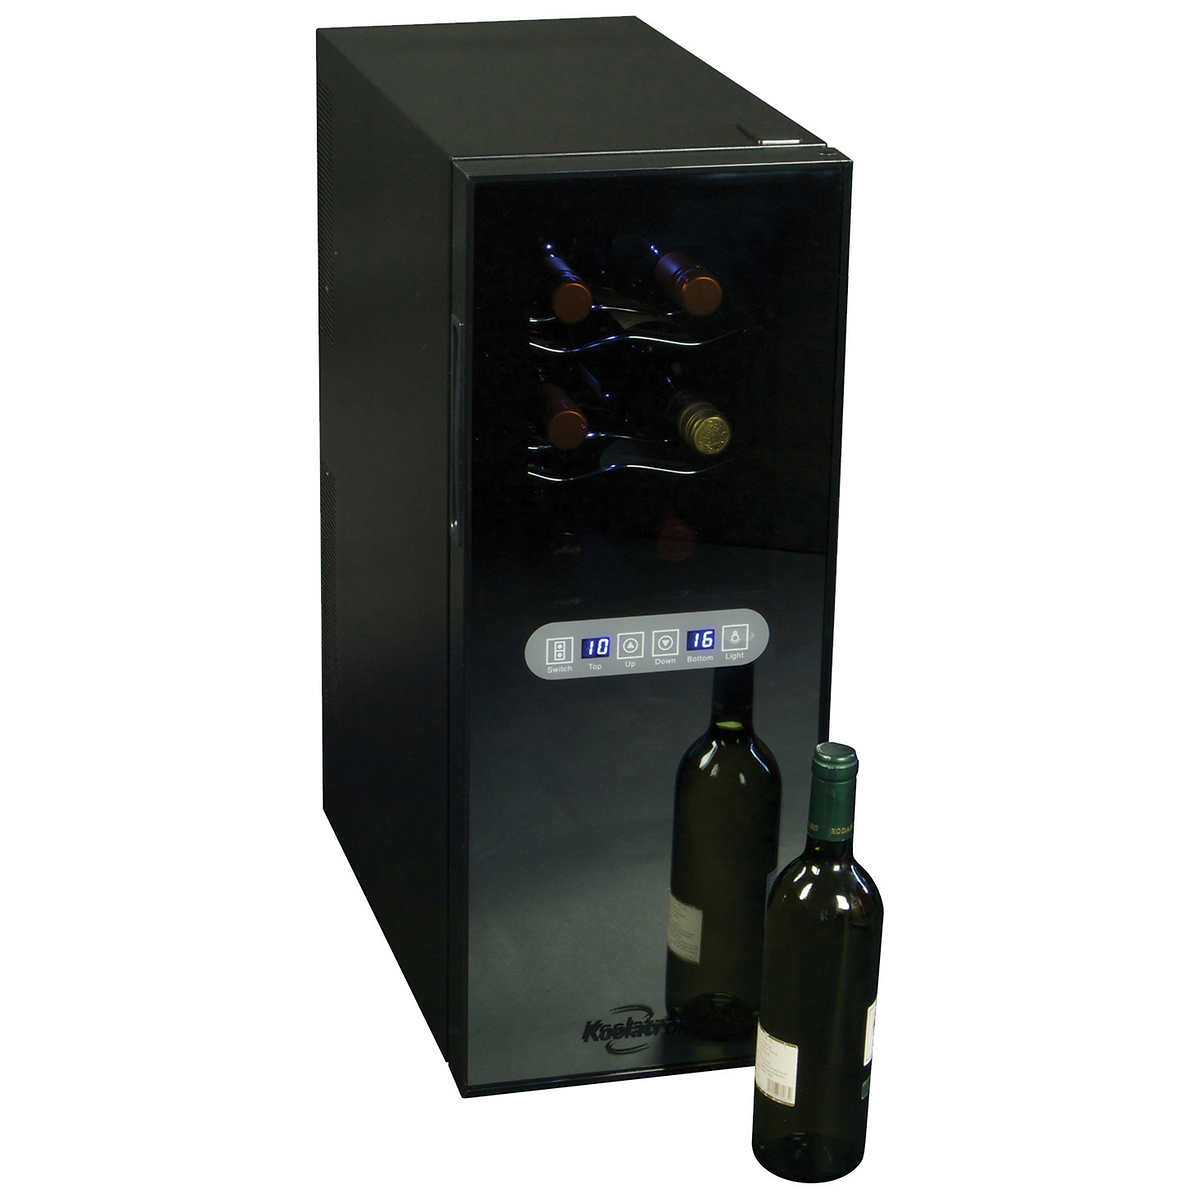 46+ Koolatron 6 bottle wine cooler manual ideas in 2021 